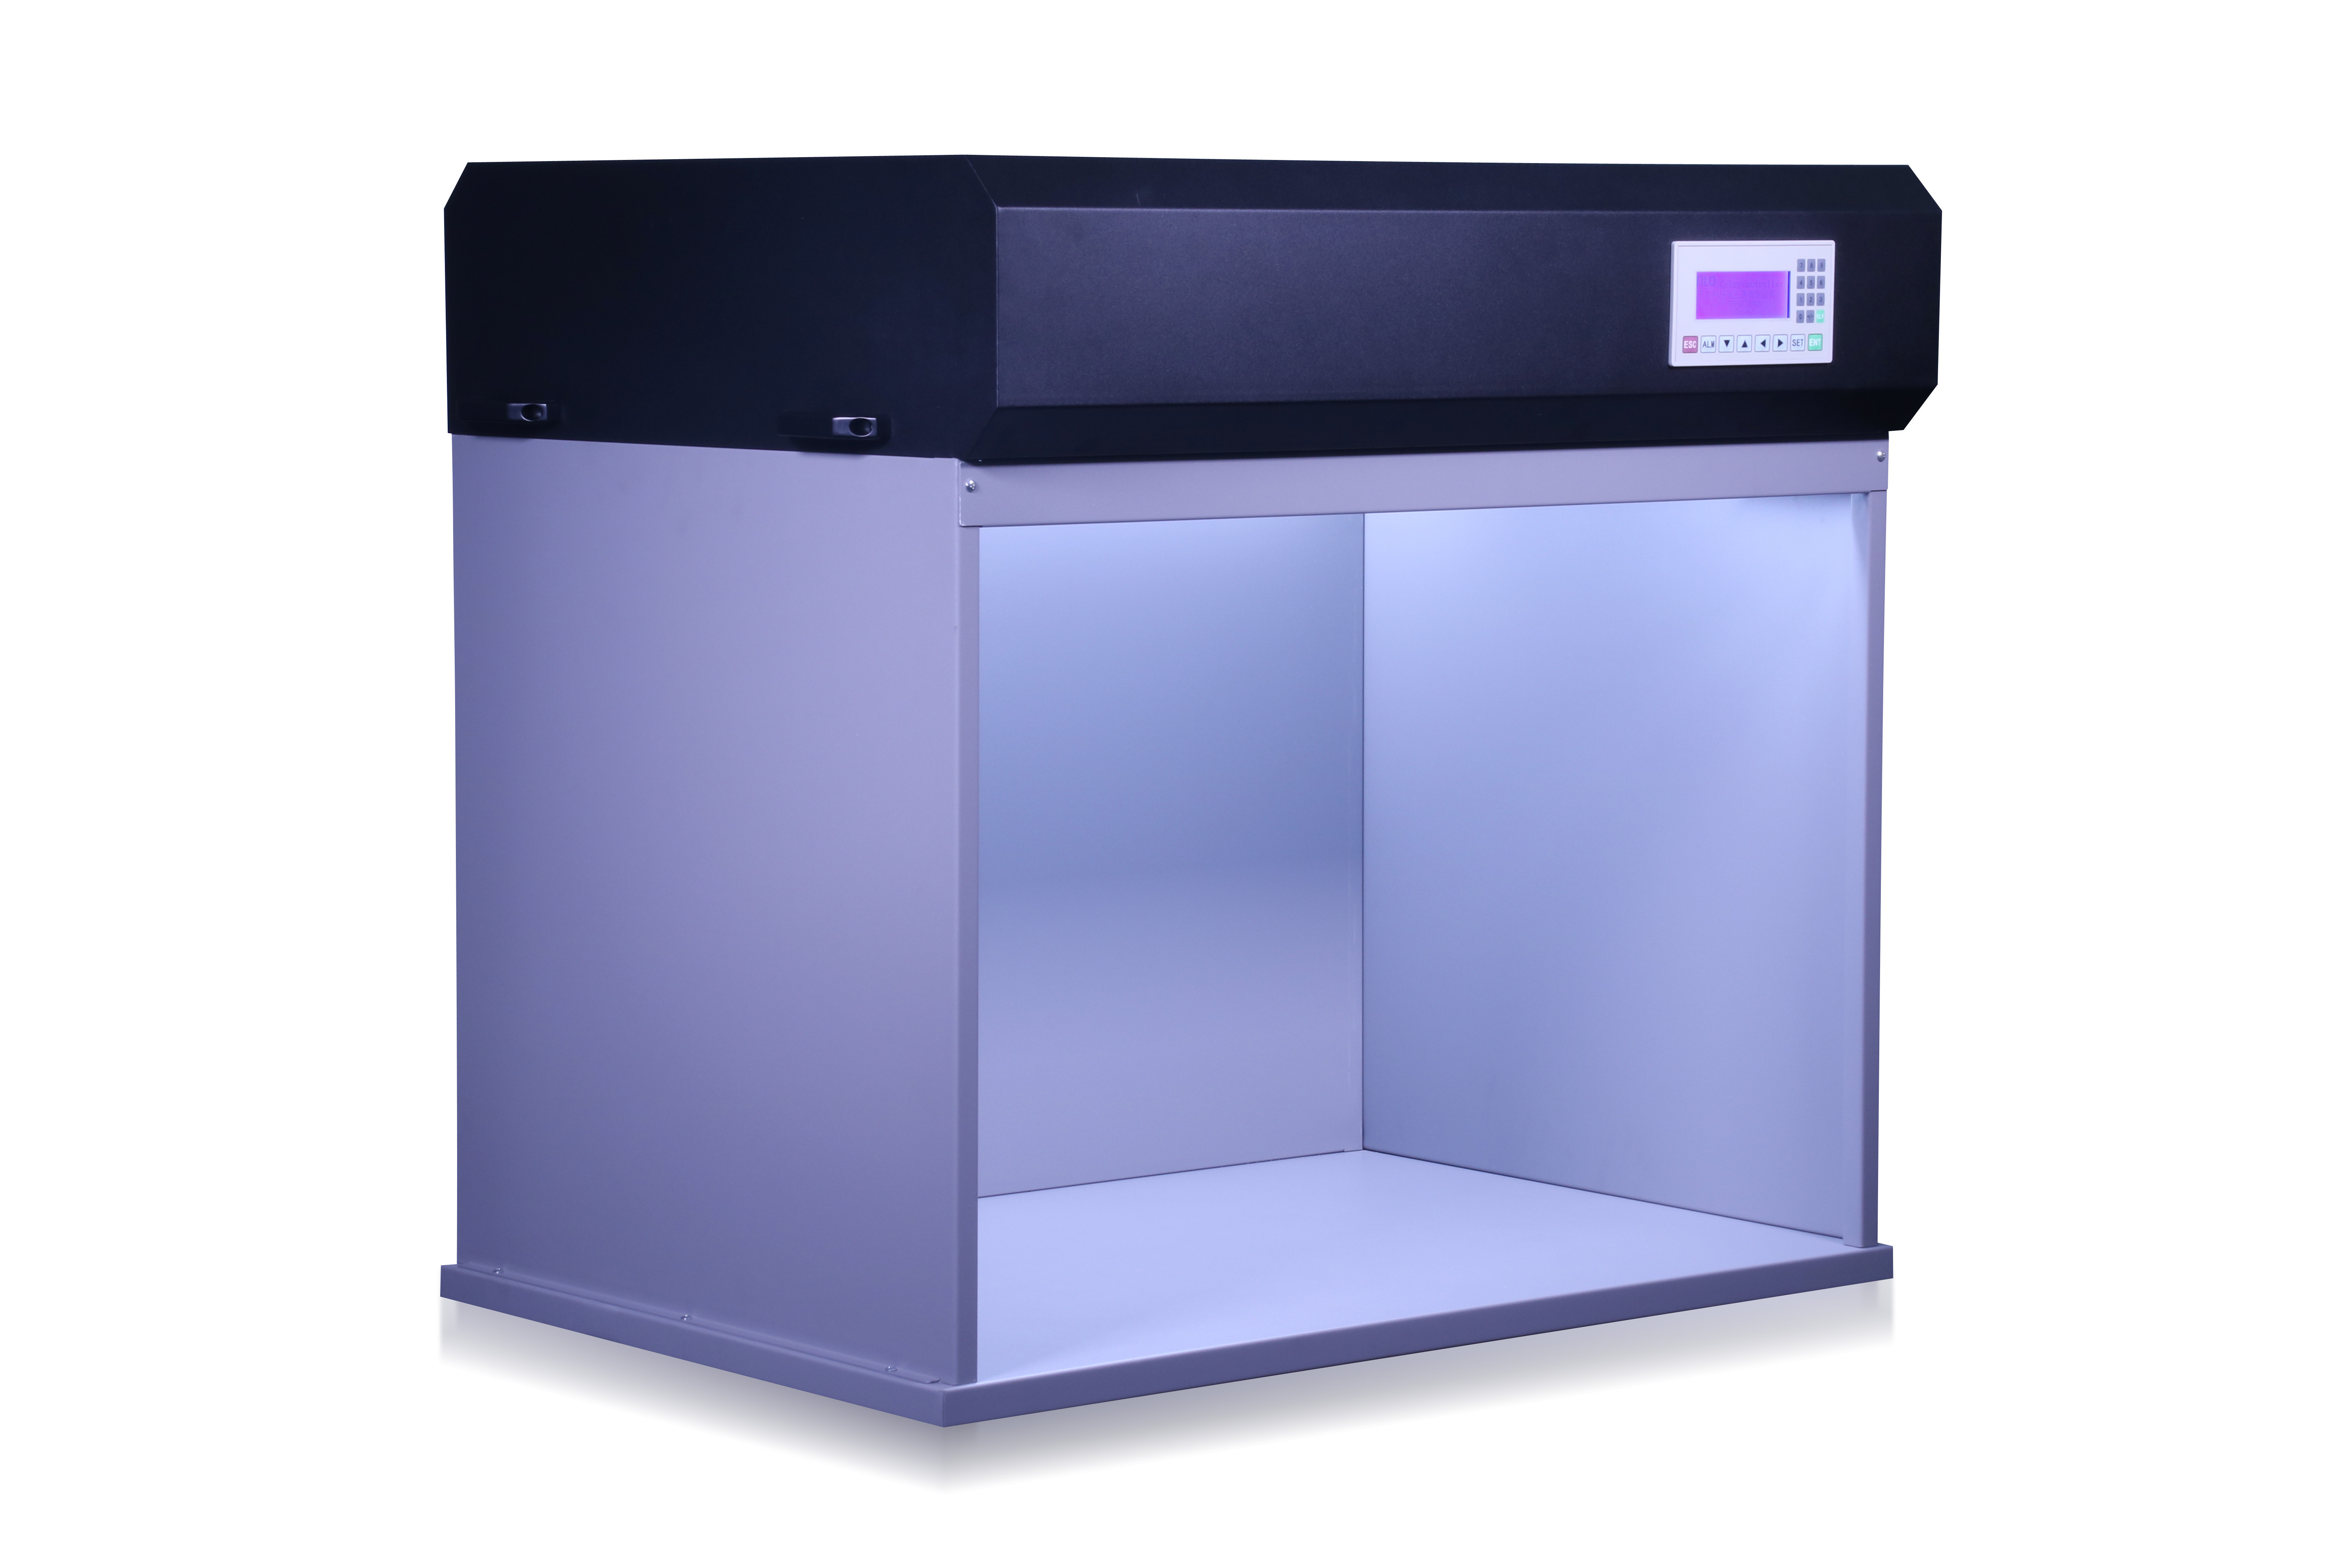 Tilo T90-7 90cm d65 d50 LED light Metal color assessment cabinet light box for color inspection